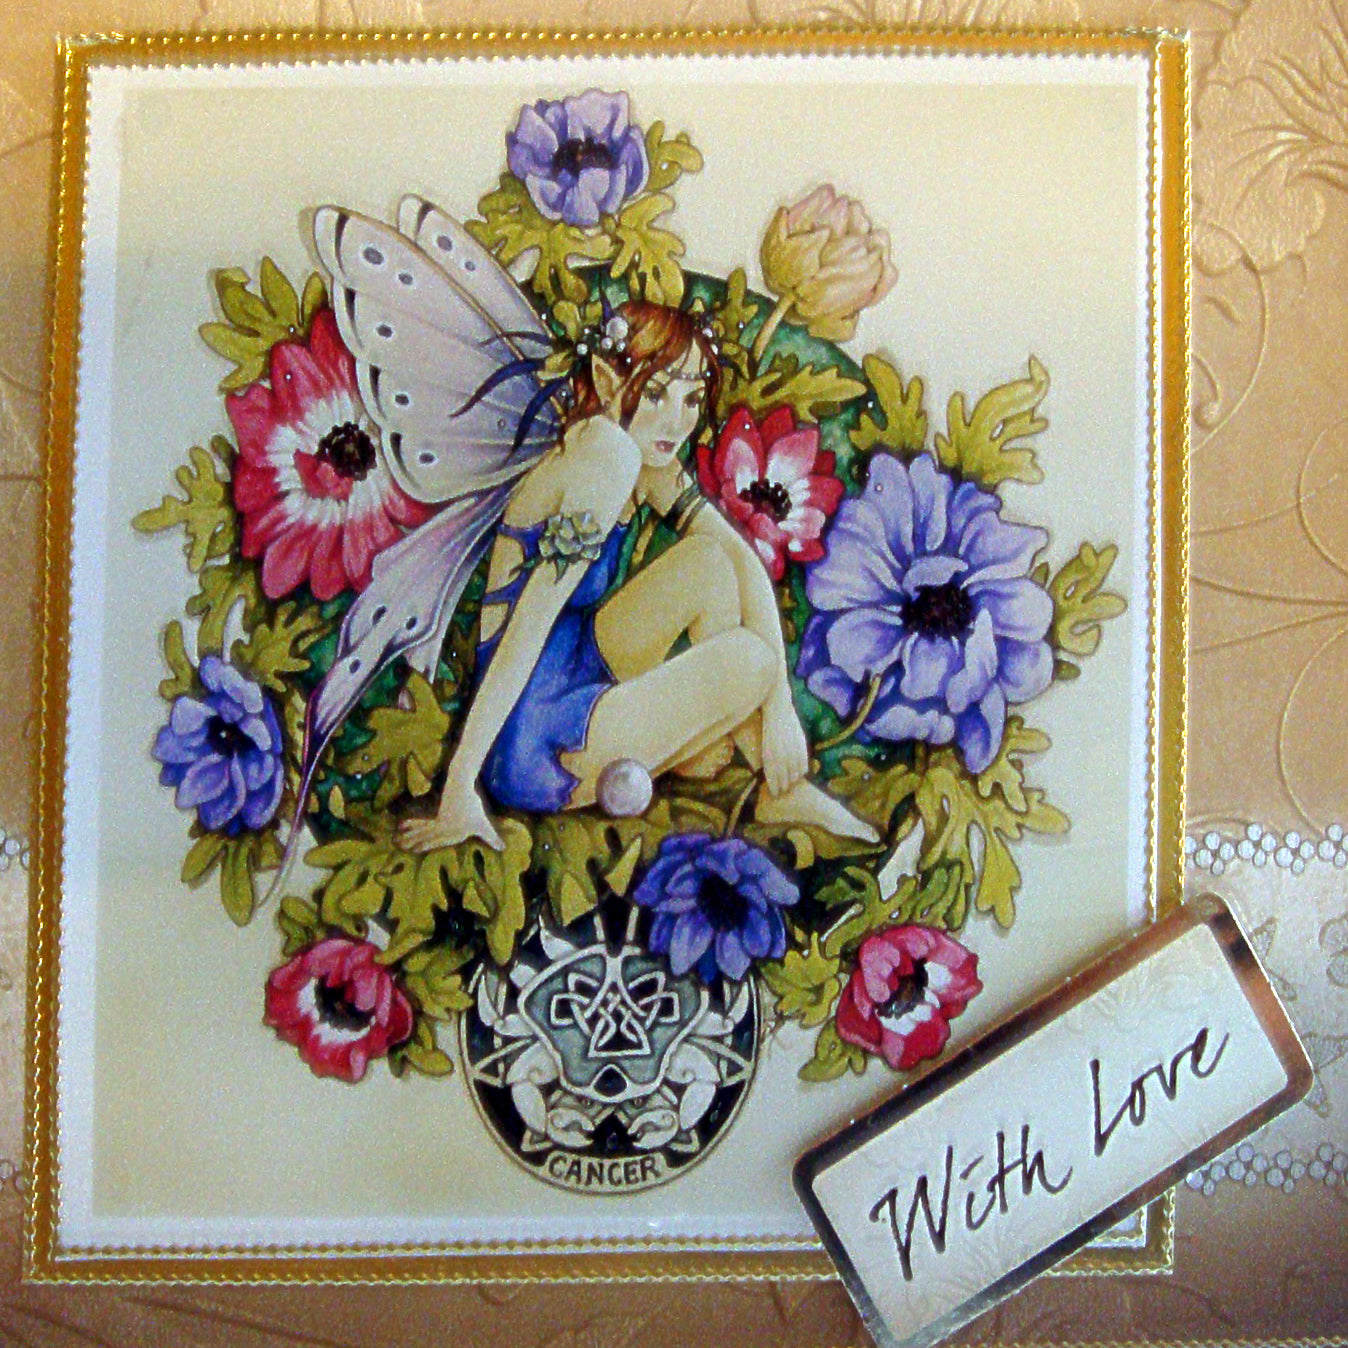 Linda Ravenscroft: Zodiac Fairies Stamp Collection